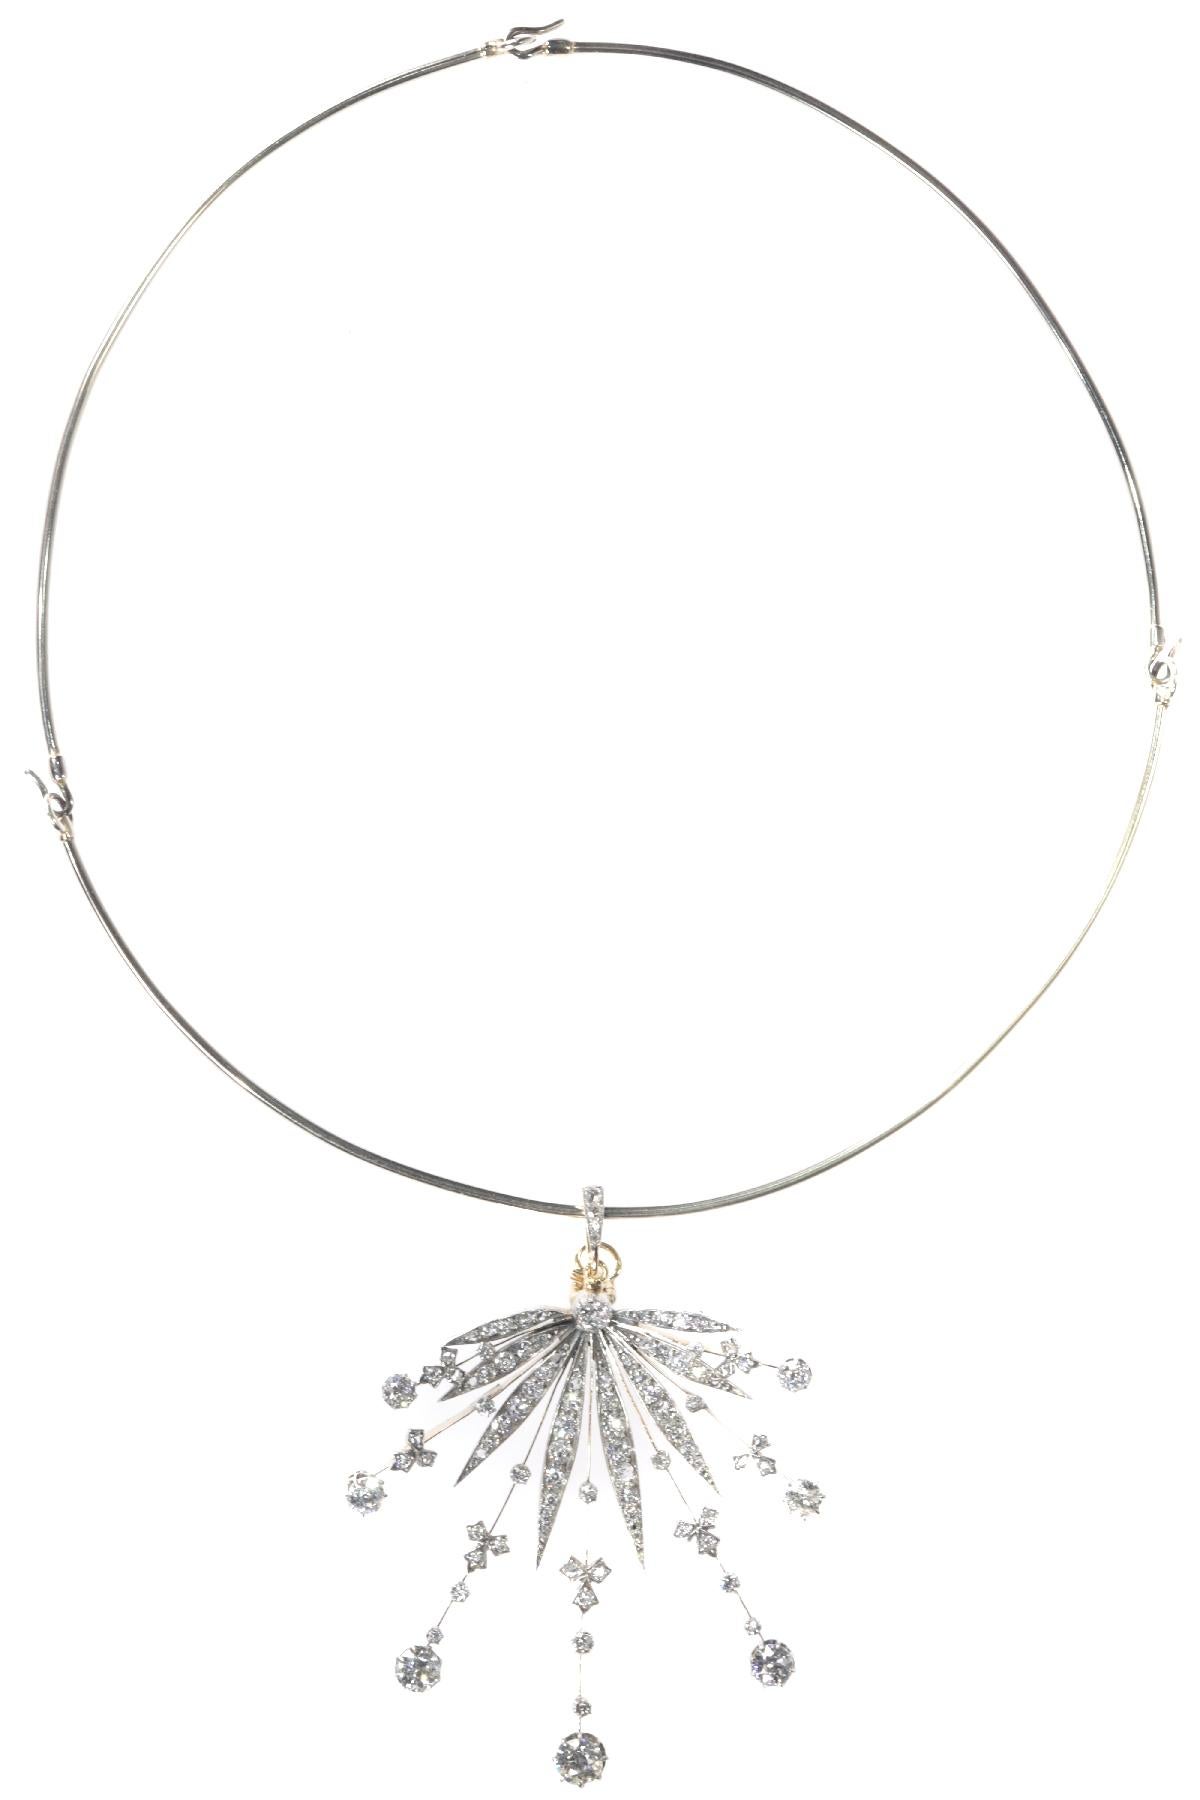 Women's Belle Époque 6.65 Carat Diamond Tiara Also Pendant, Necklace or Brooch, 1900s